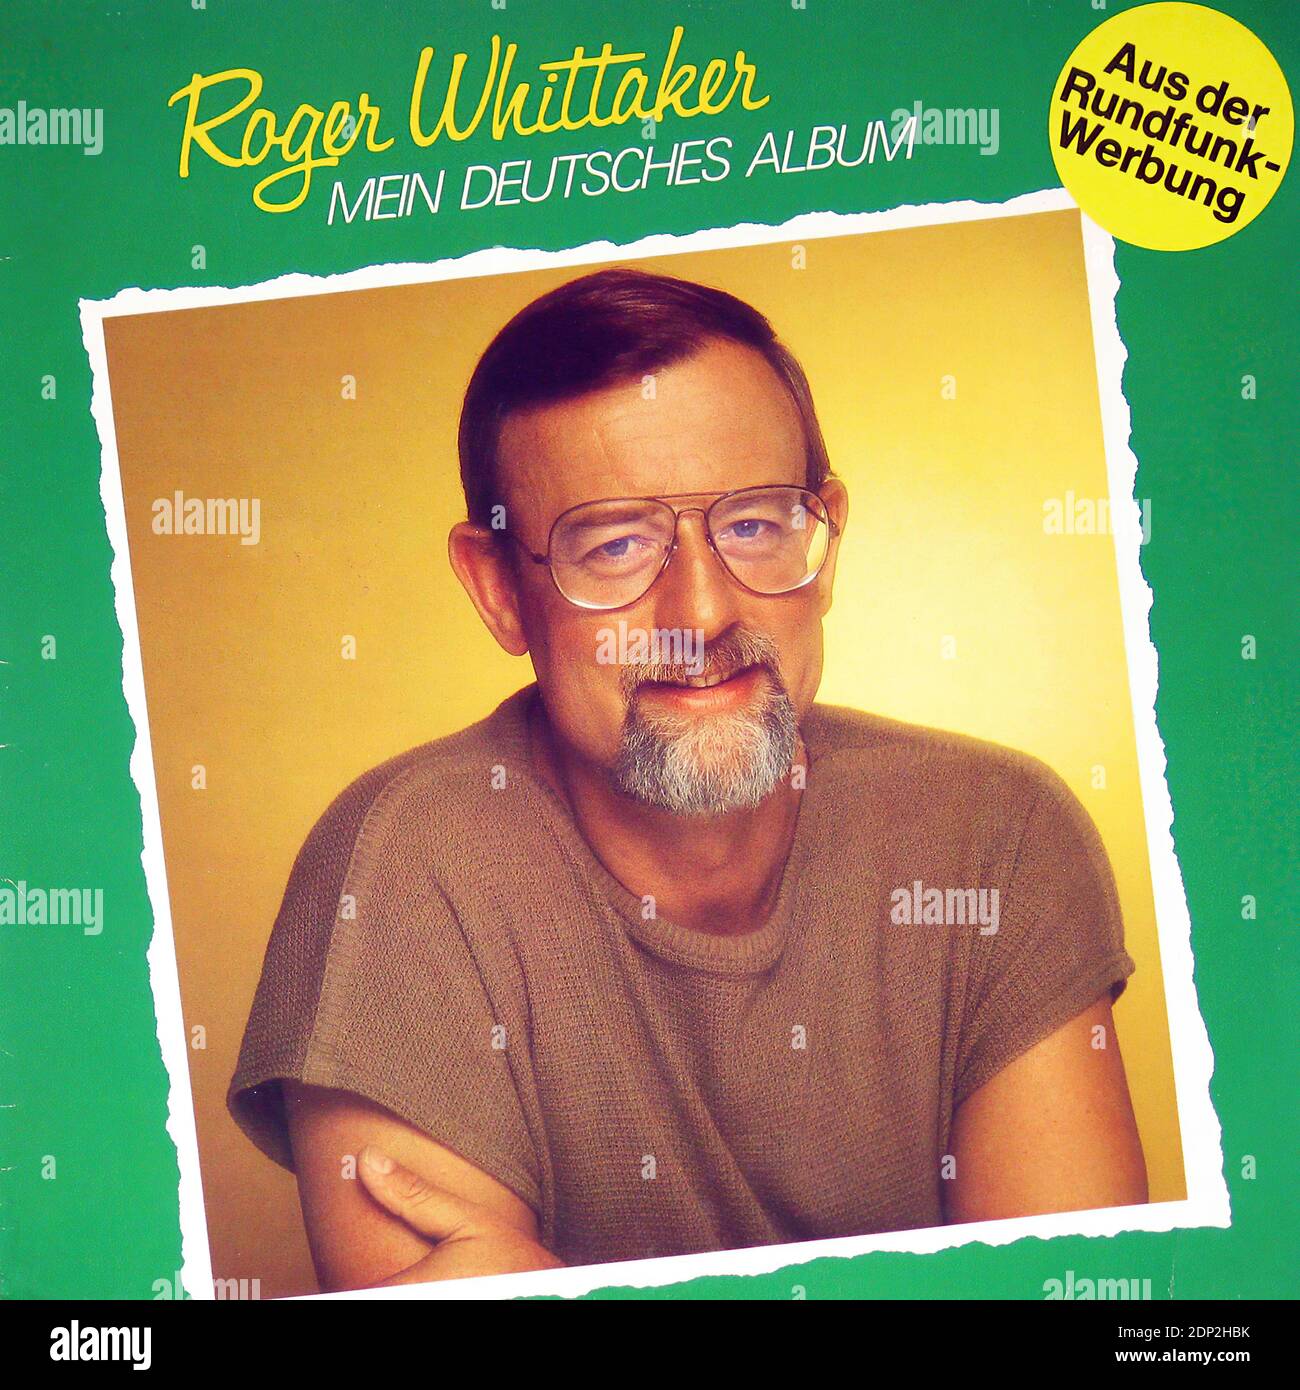 Roger Whittaker Mein Deutsches Album - Vintage Vinyl Record Cover Stock Photo